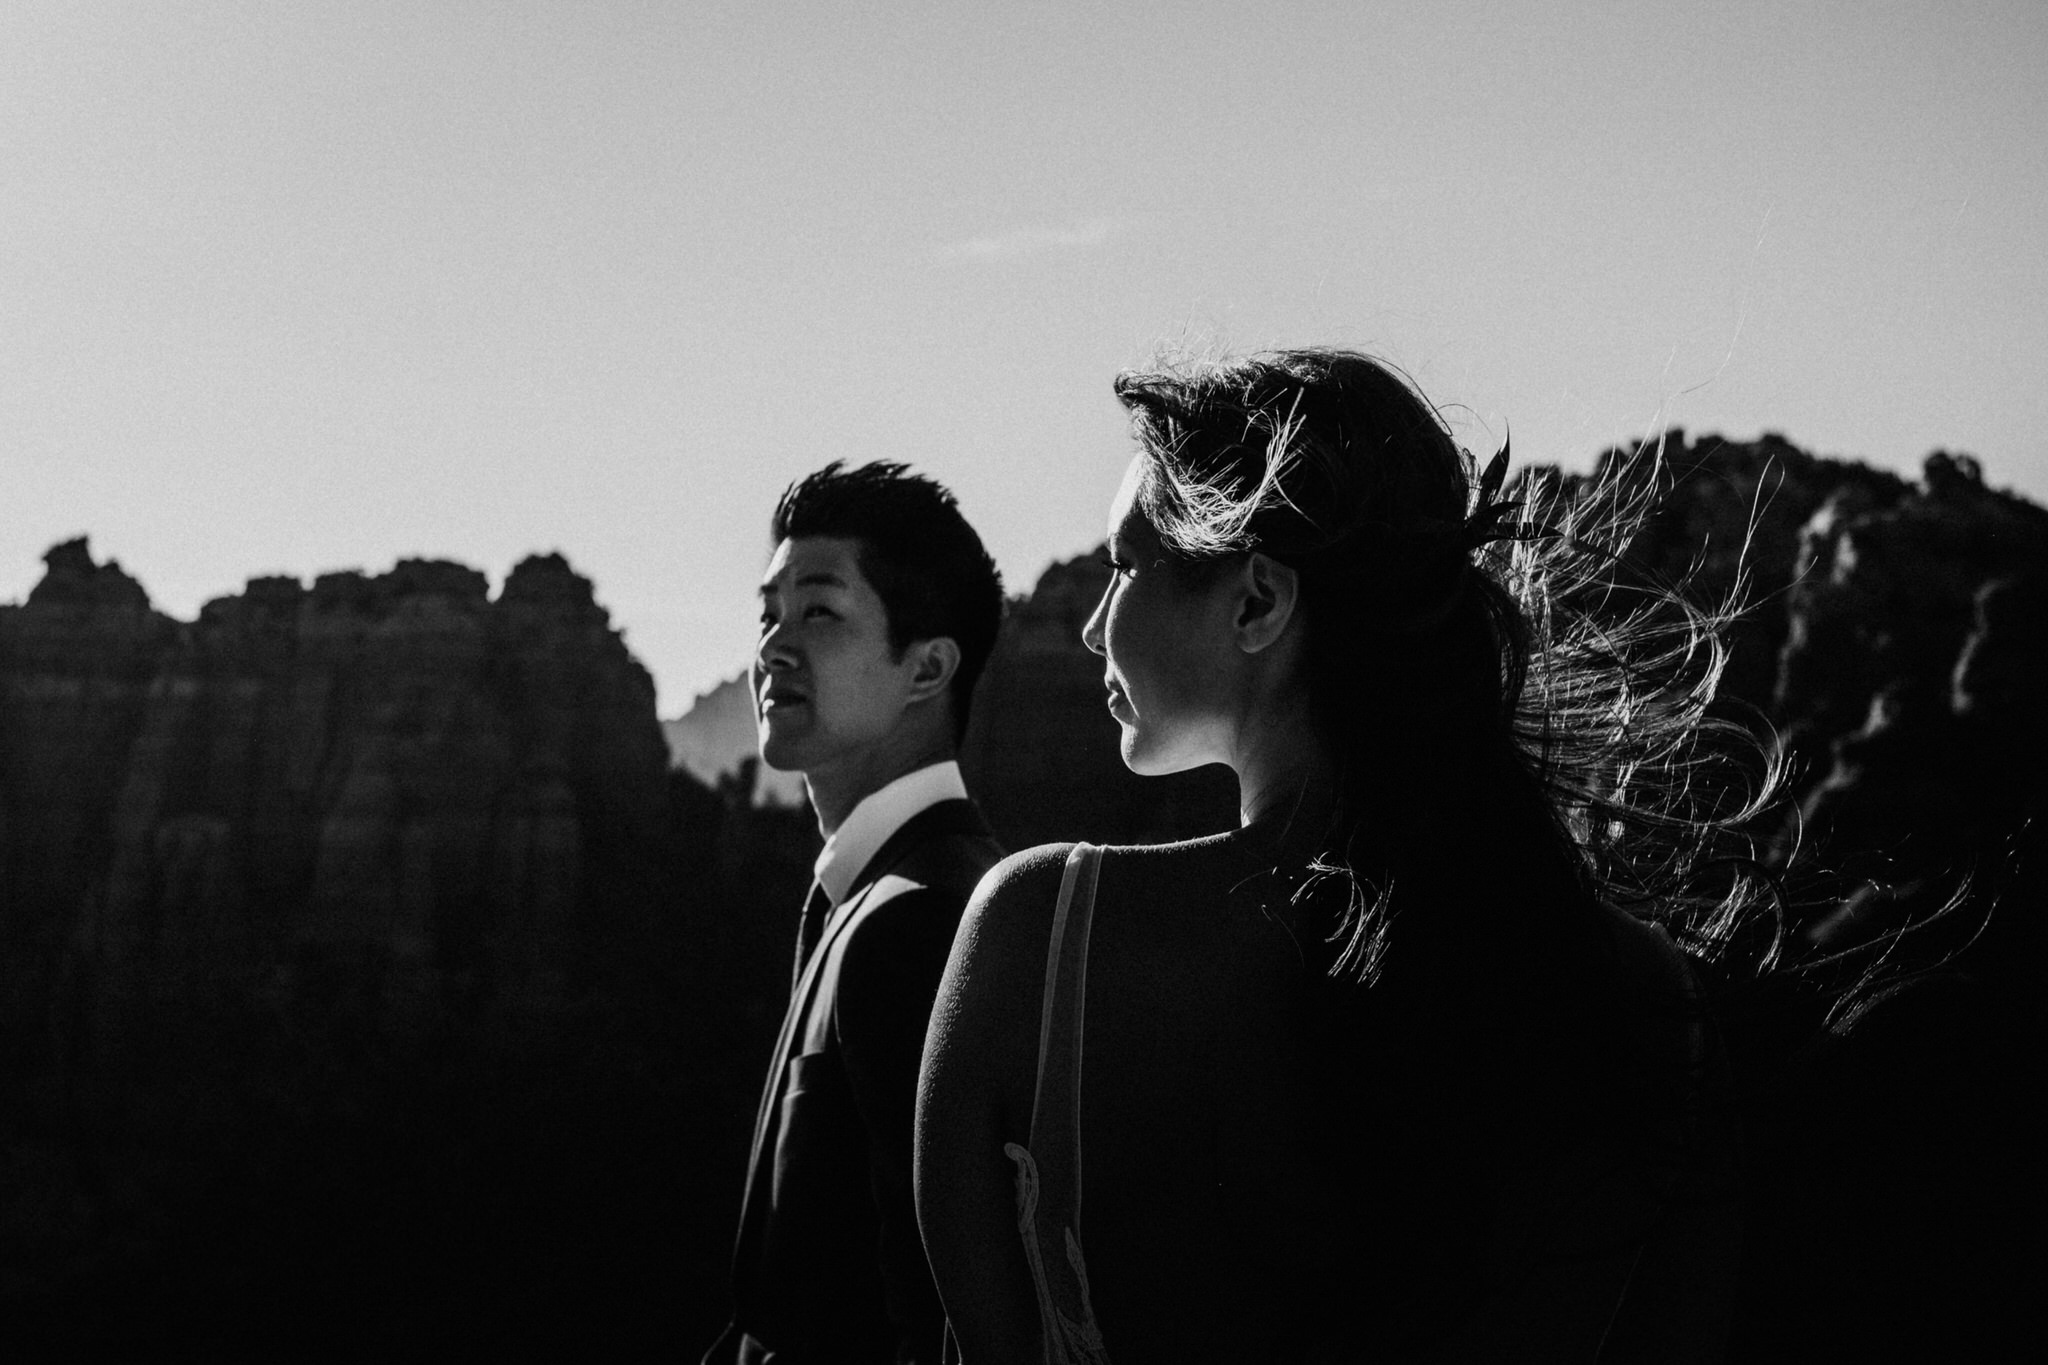 Wedding in Arizona, Sedona - Portraits